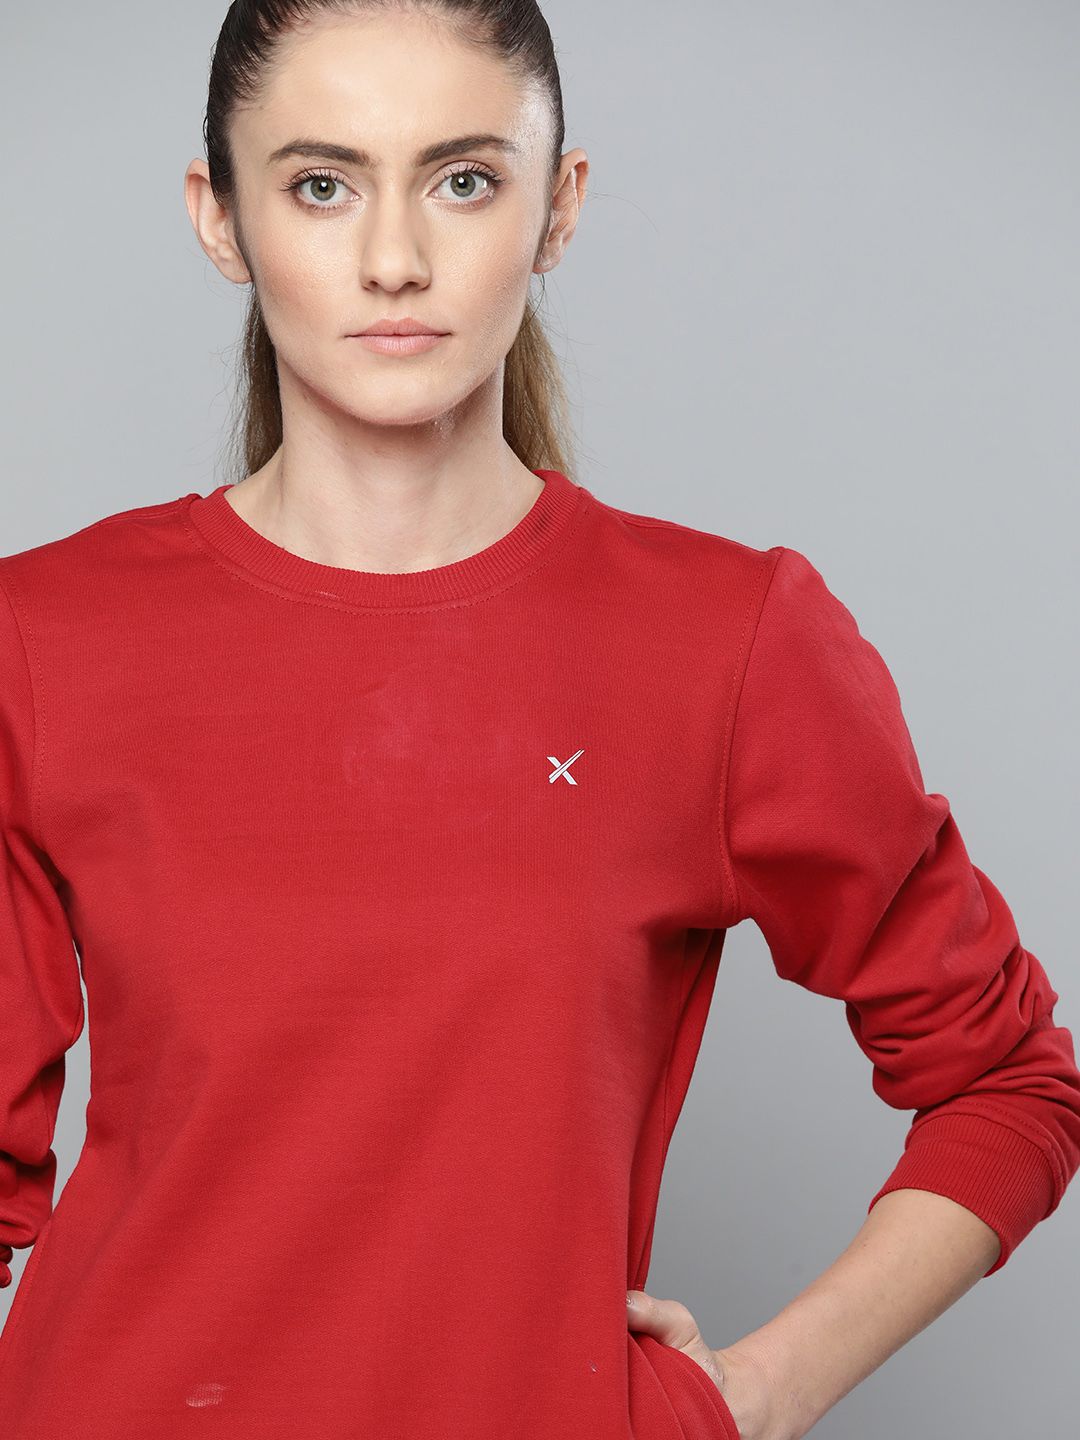 HRX by Hrithik Roshan Women Red Sweatshirt Price in India